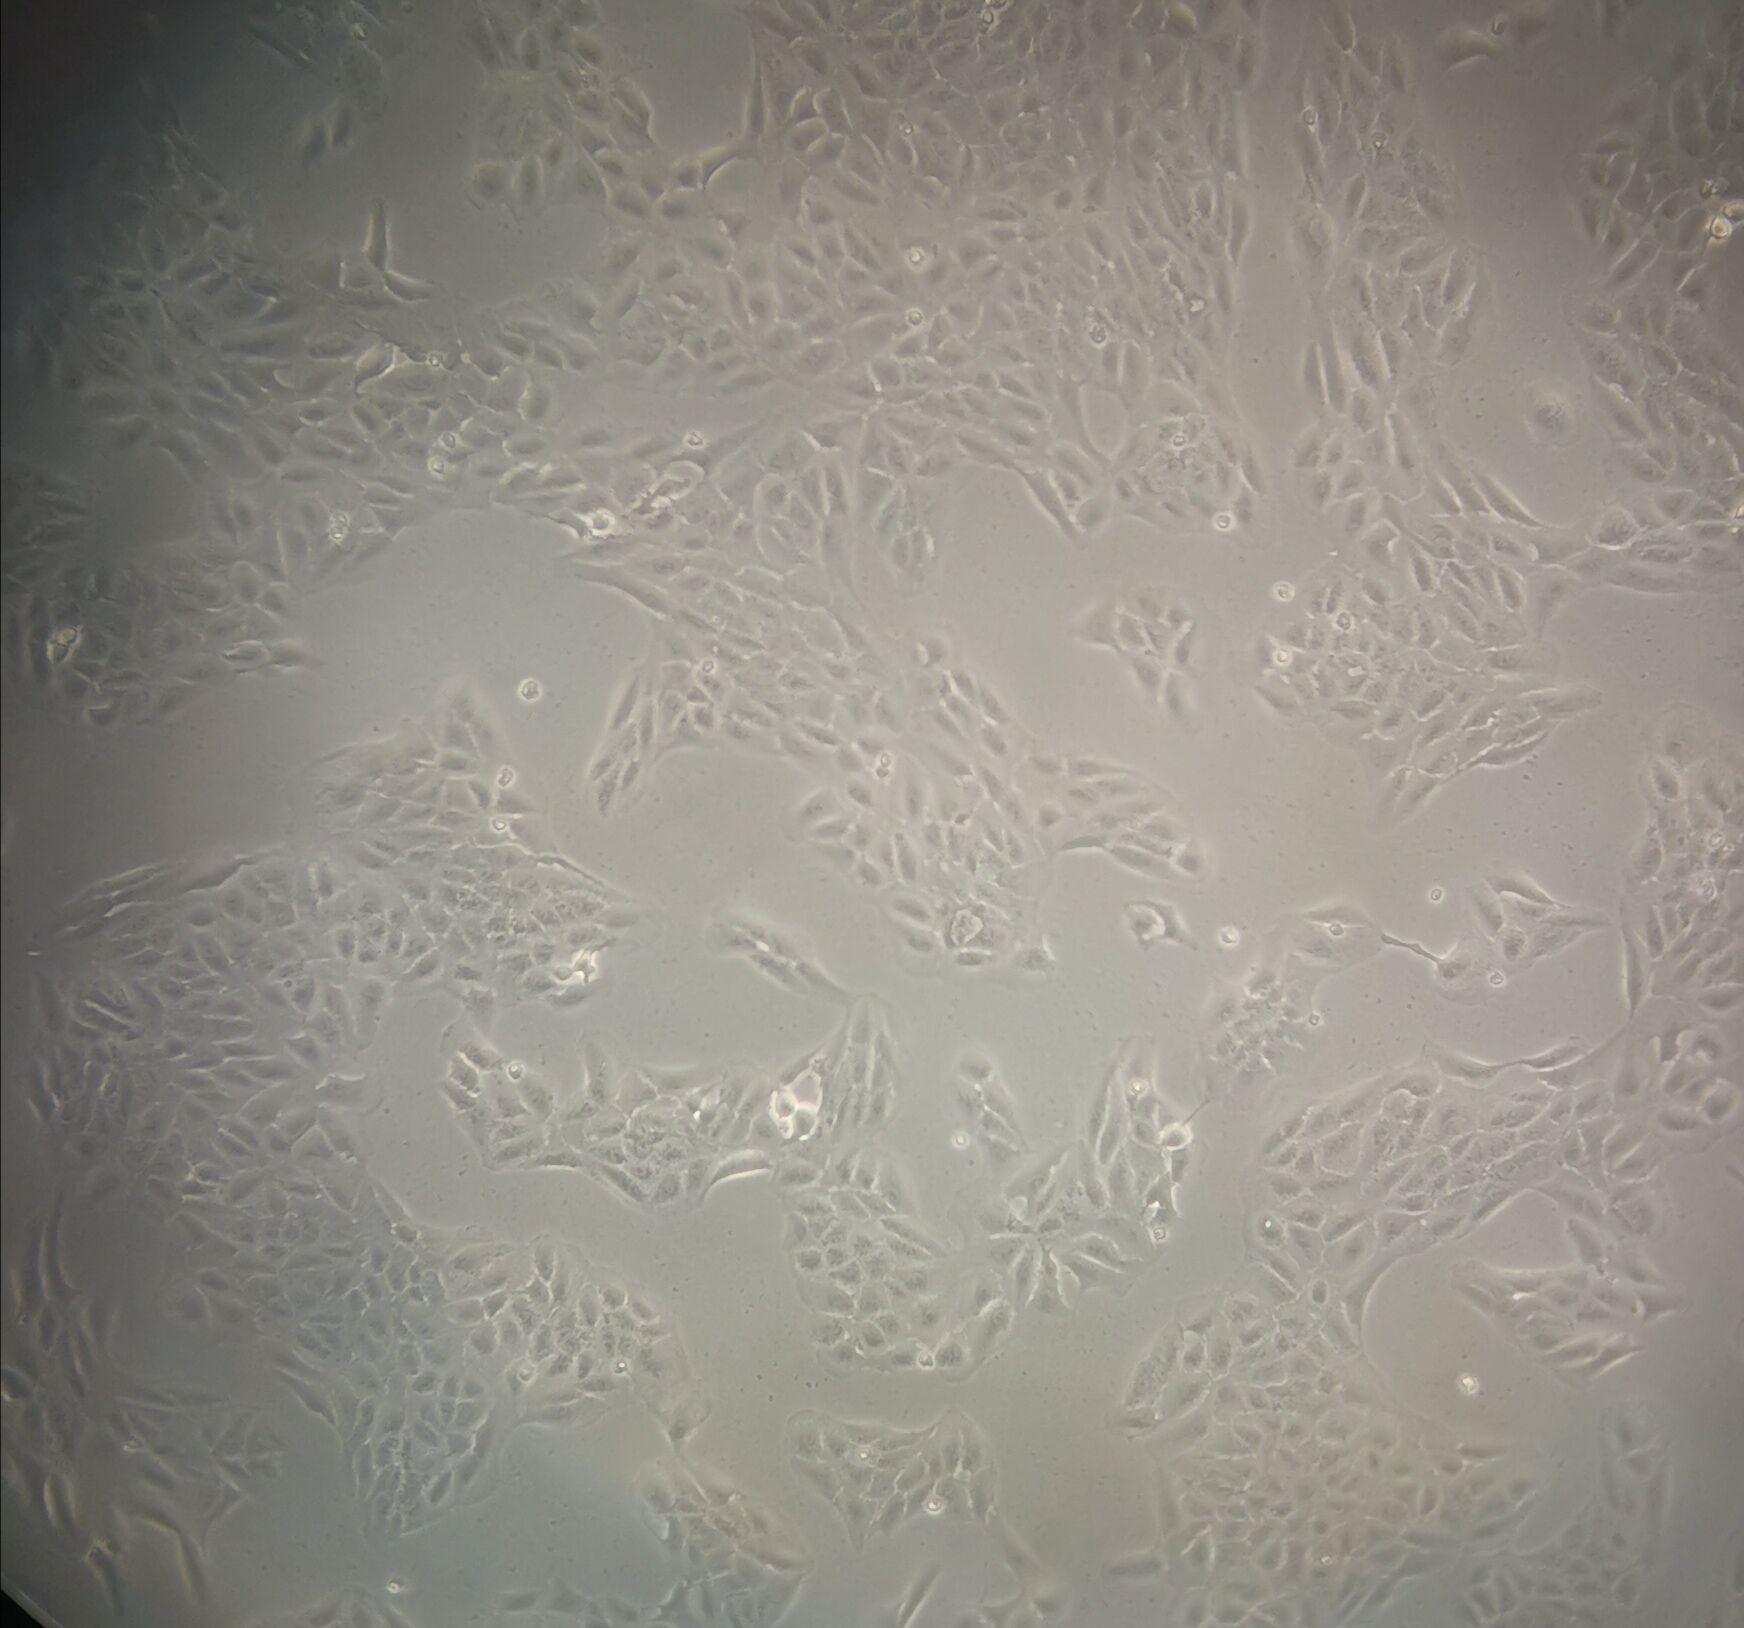 LNCaP C4-2B Cells(赠送Str鉴定报告)|人前列腺癌细胞